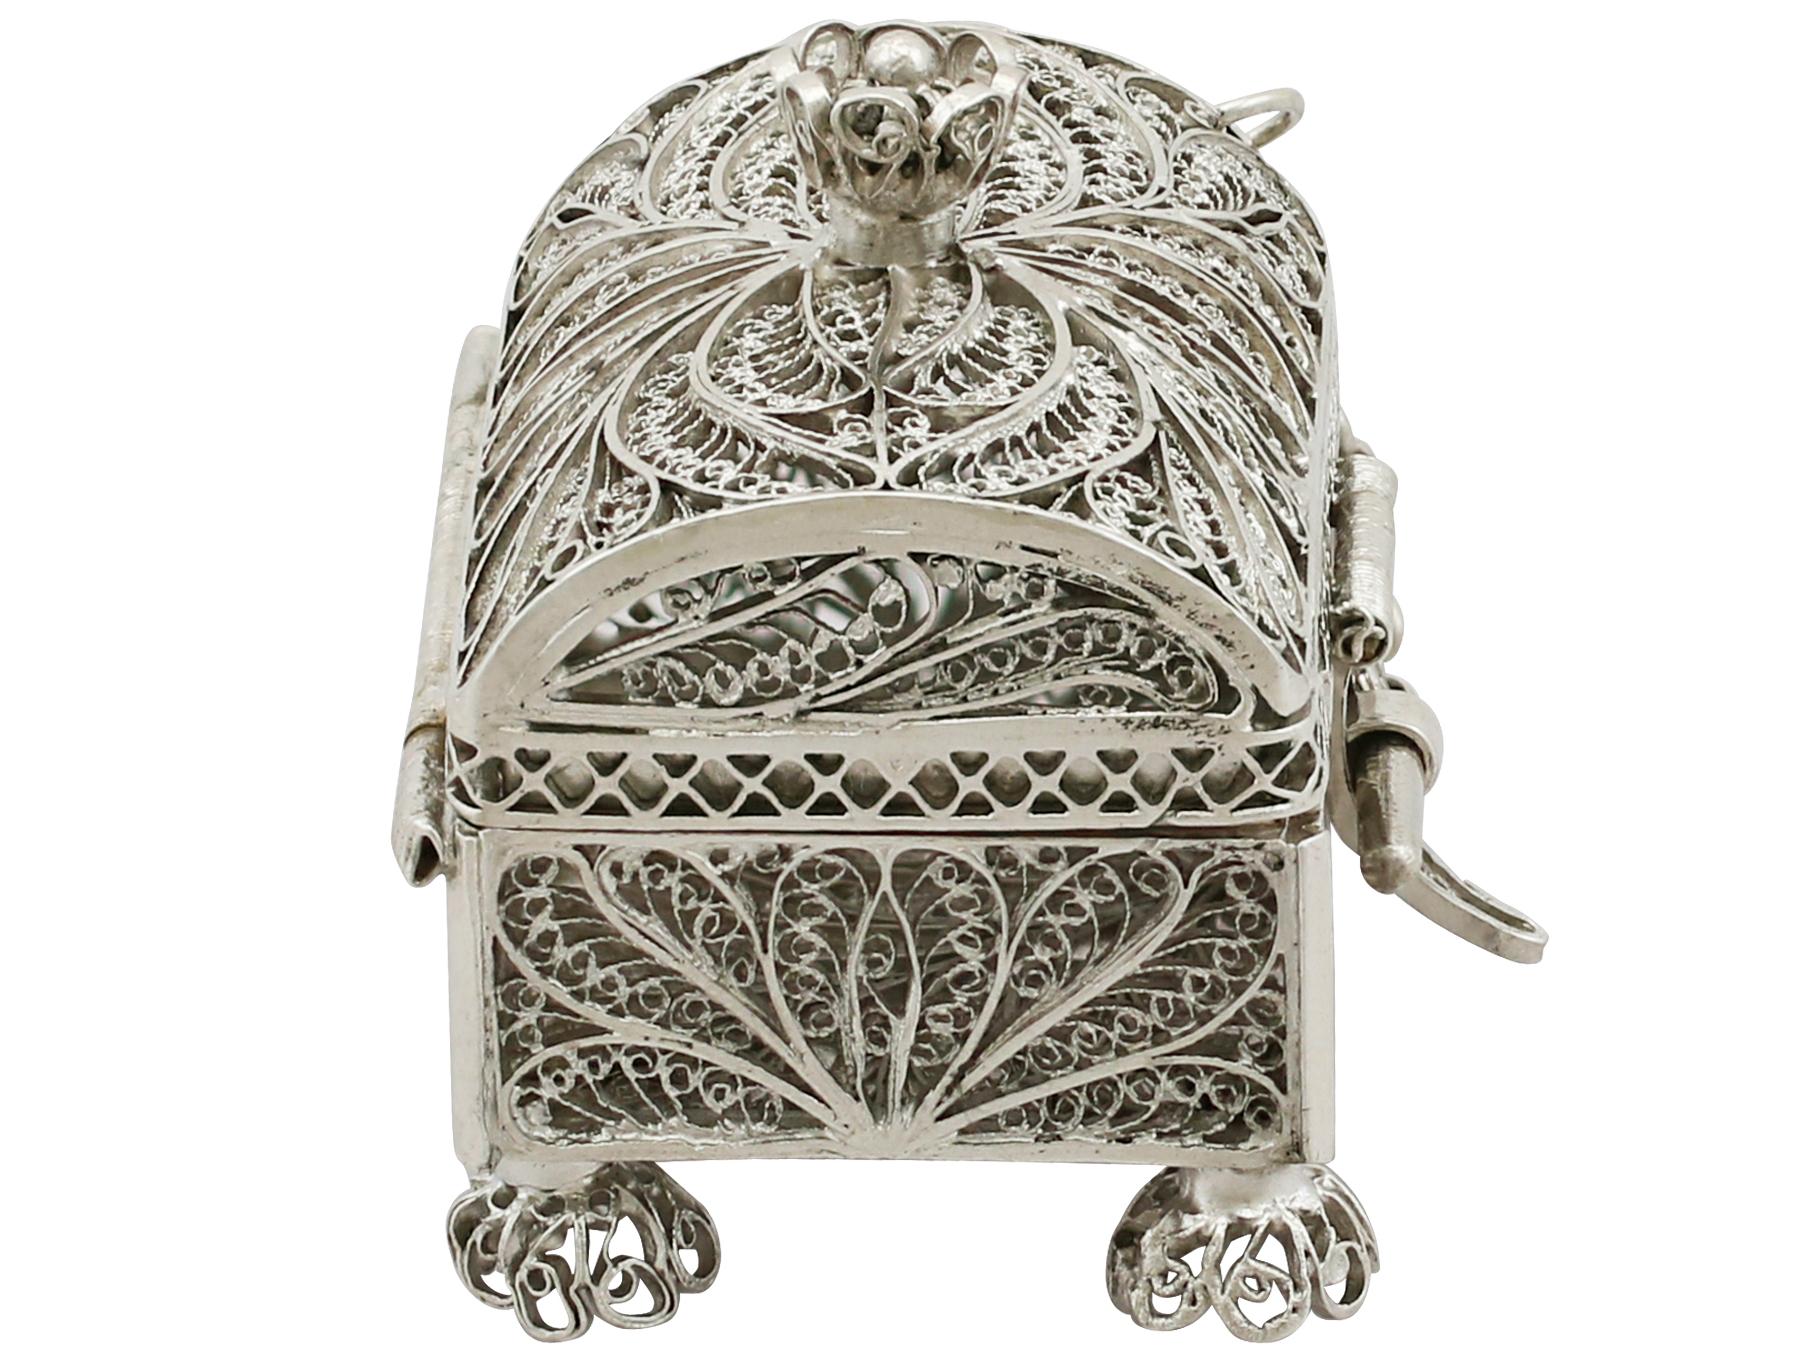 Elephant Decorative Trinket Box from London Ornaments